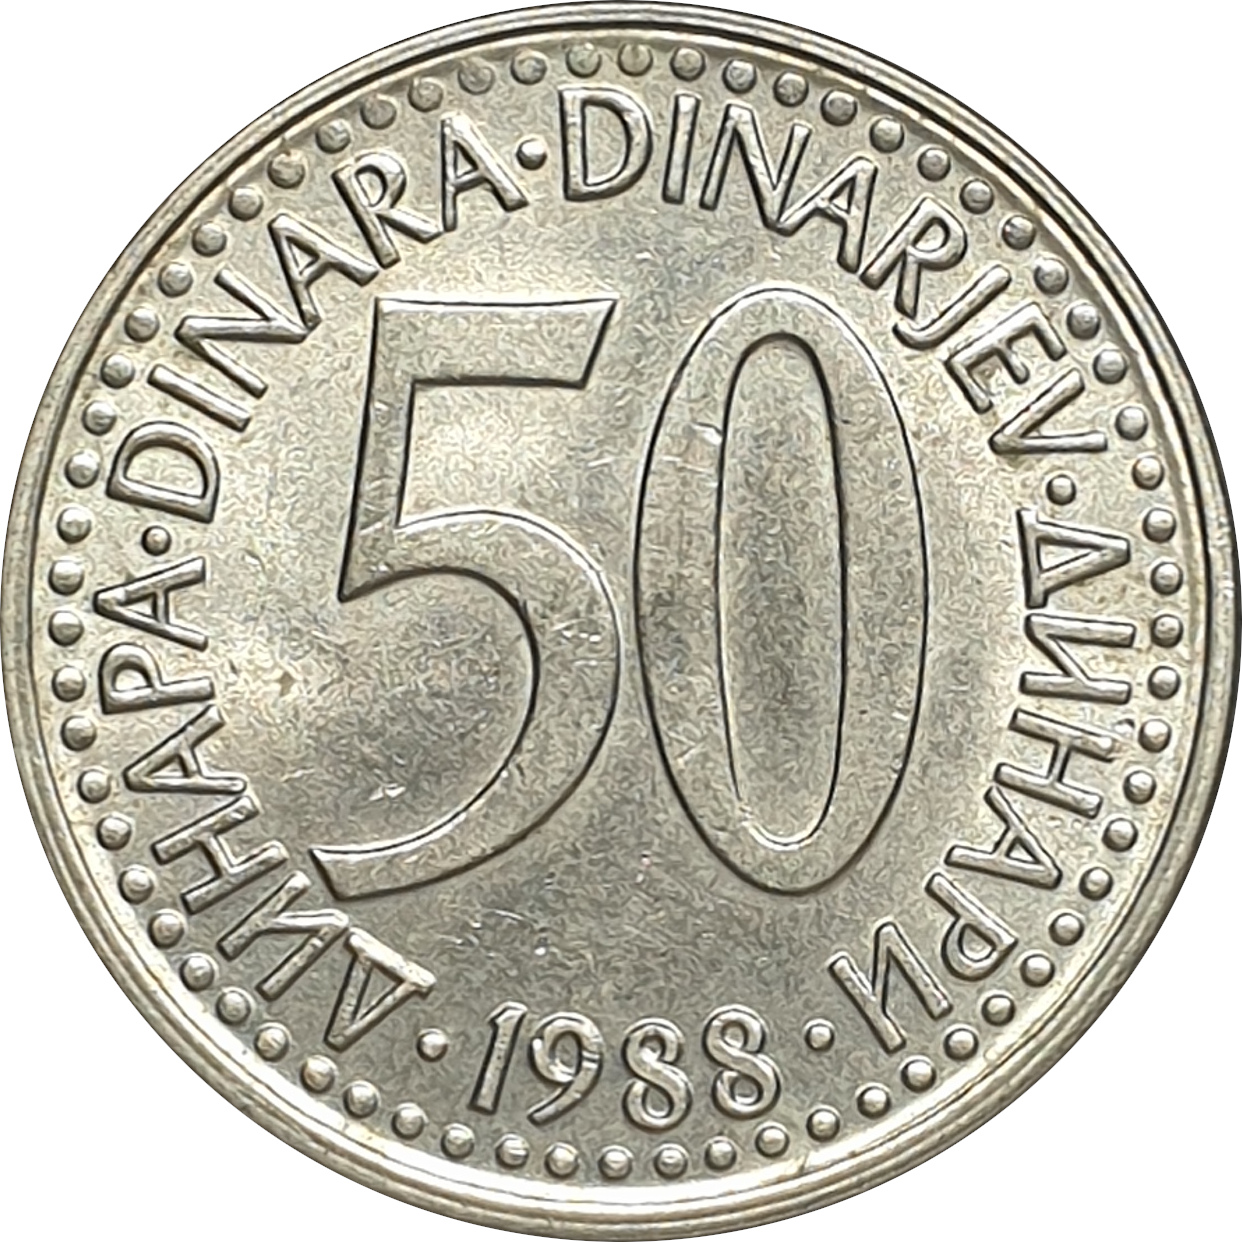 50 dinara - Emblem - 1985 issue